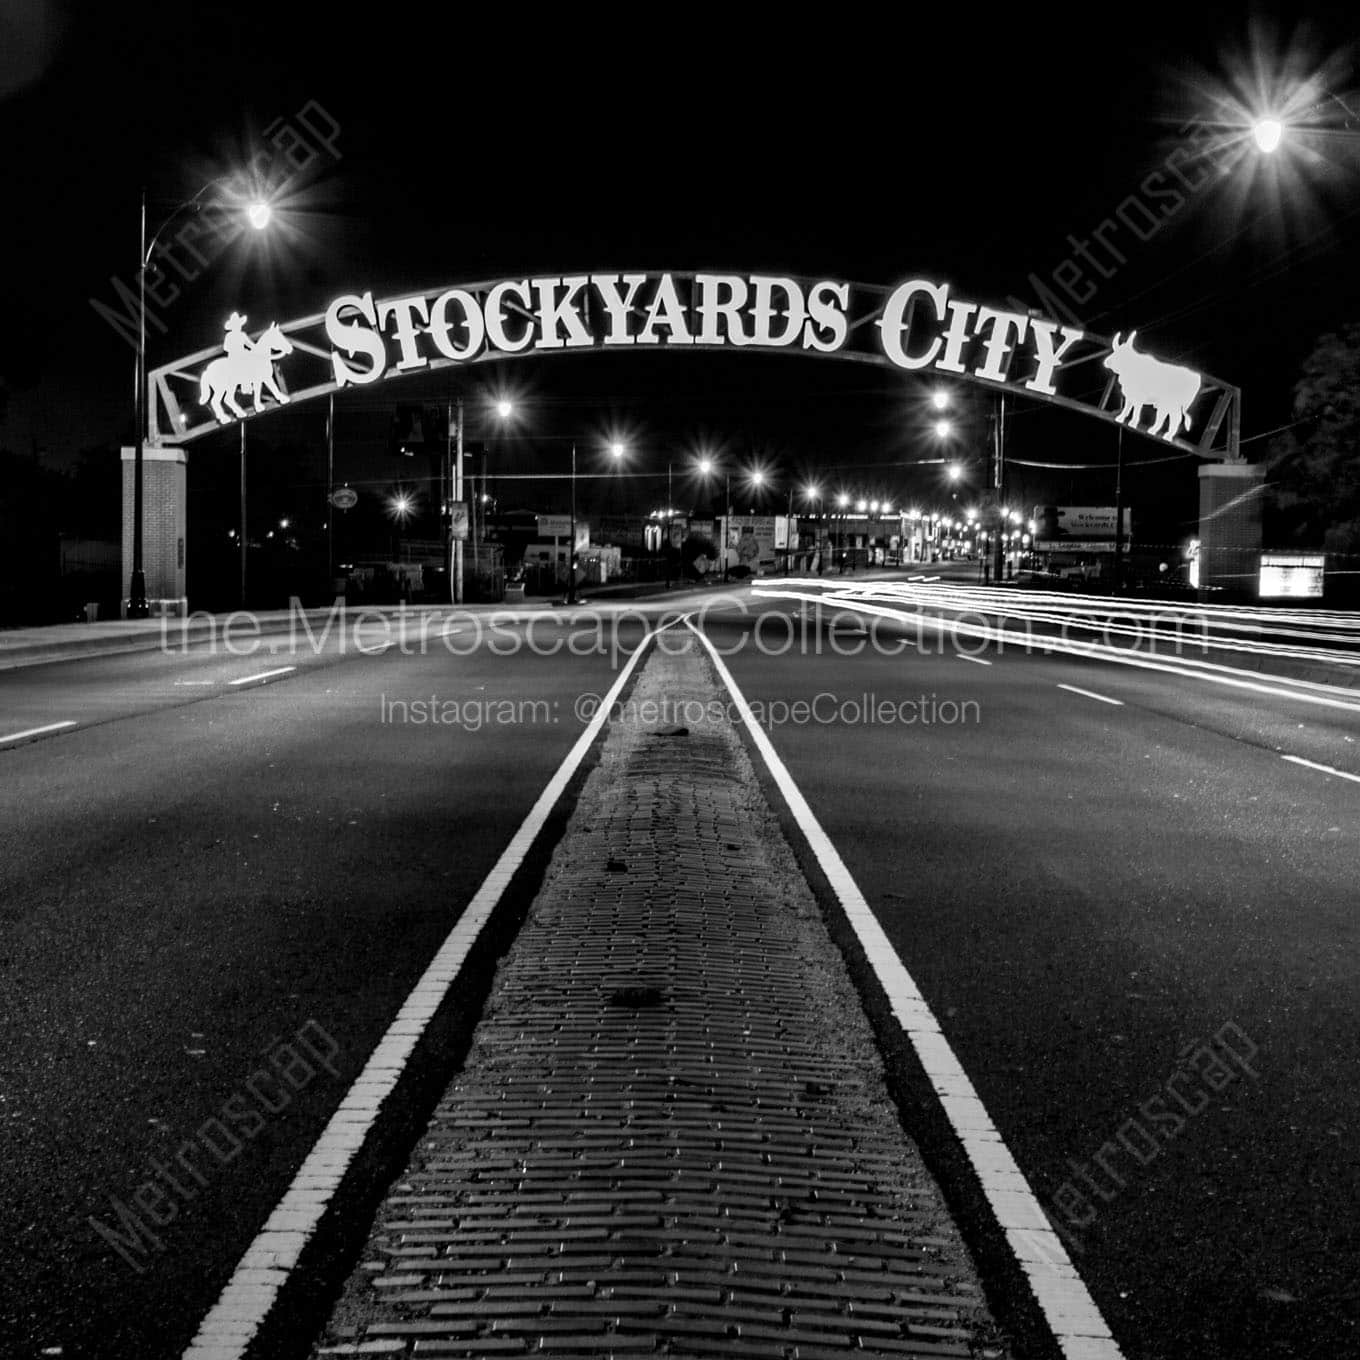 okc stockyards city at night Black & White Office Art